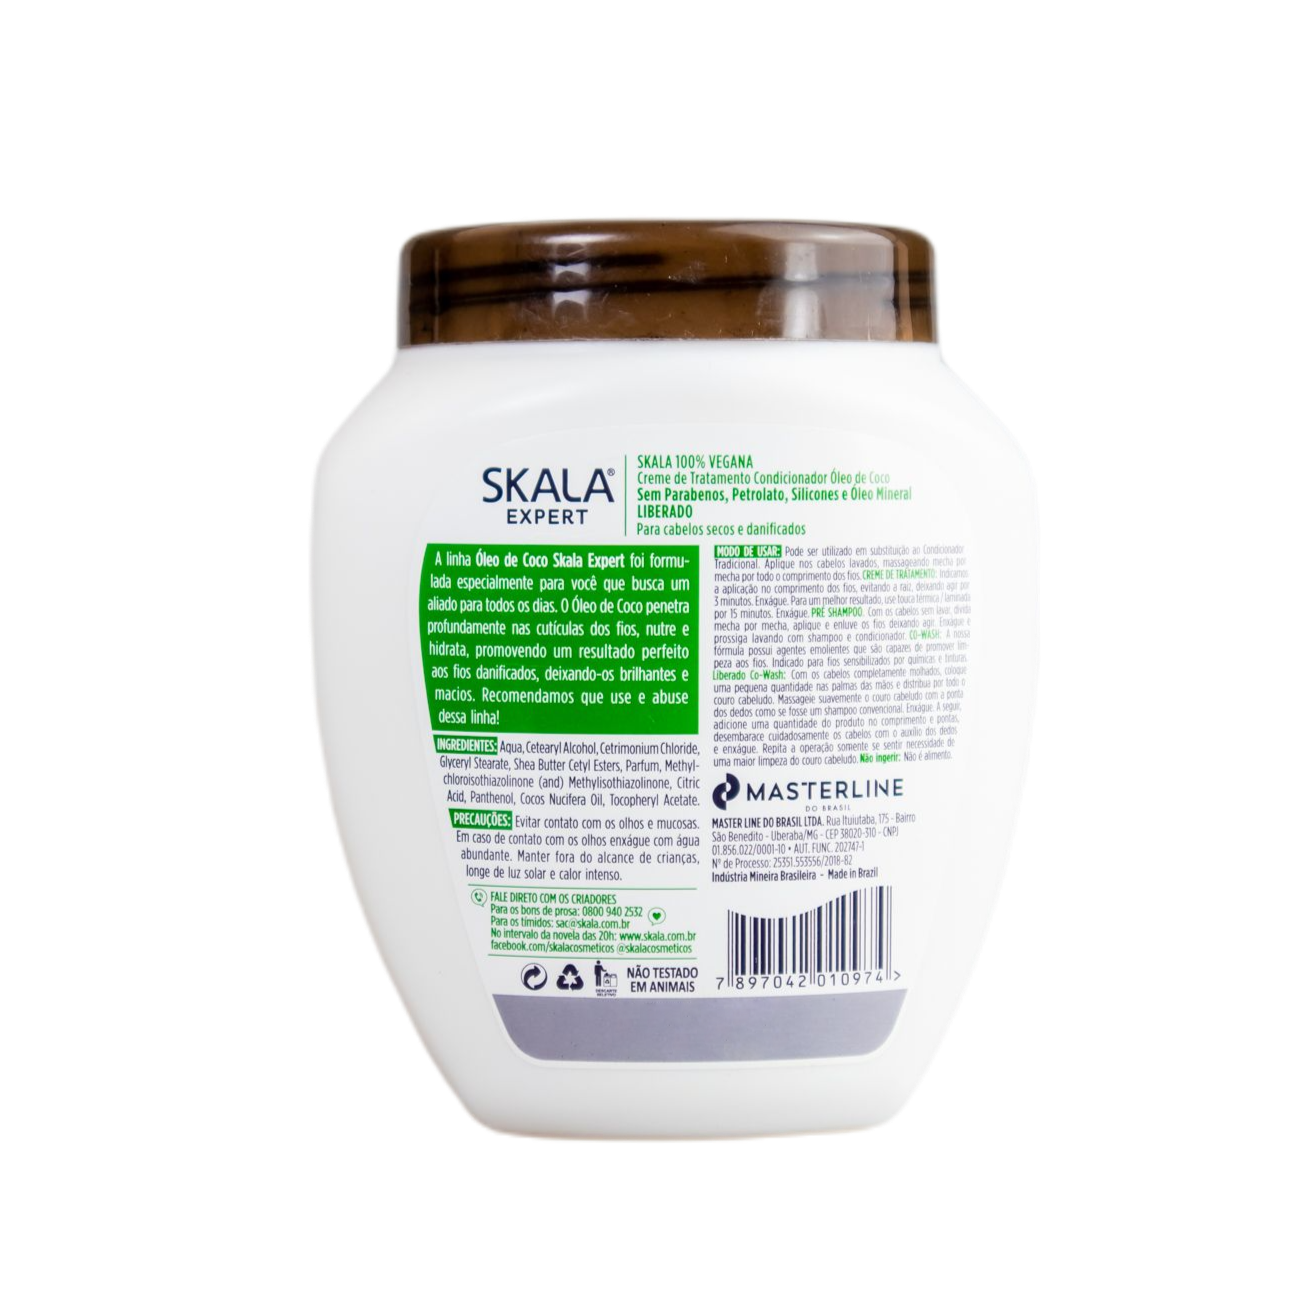 Skala Treatment Cream Creme De Tratamento Óleo De Coco / Cream Of Coconut Oil Treatment Treatment Cream - Skala